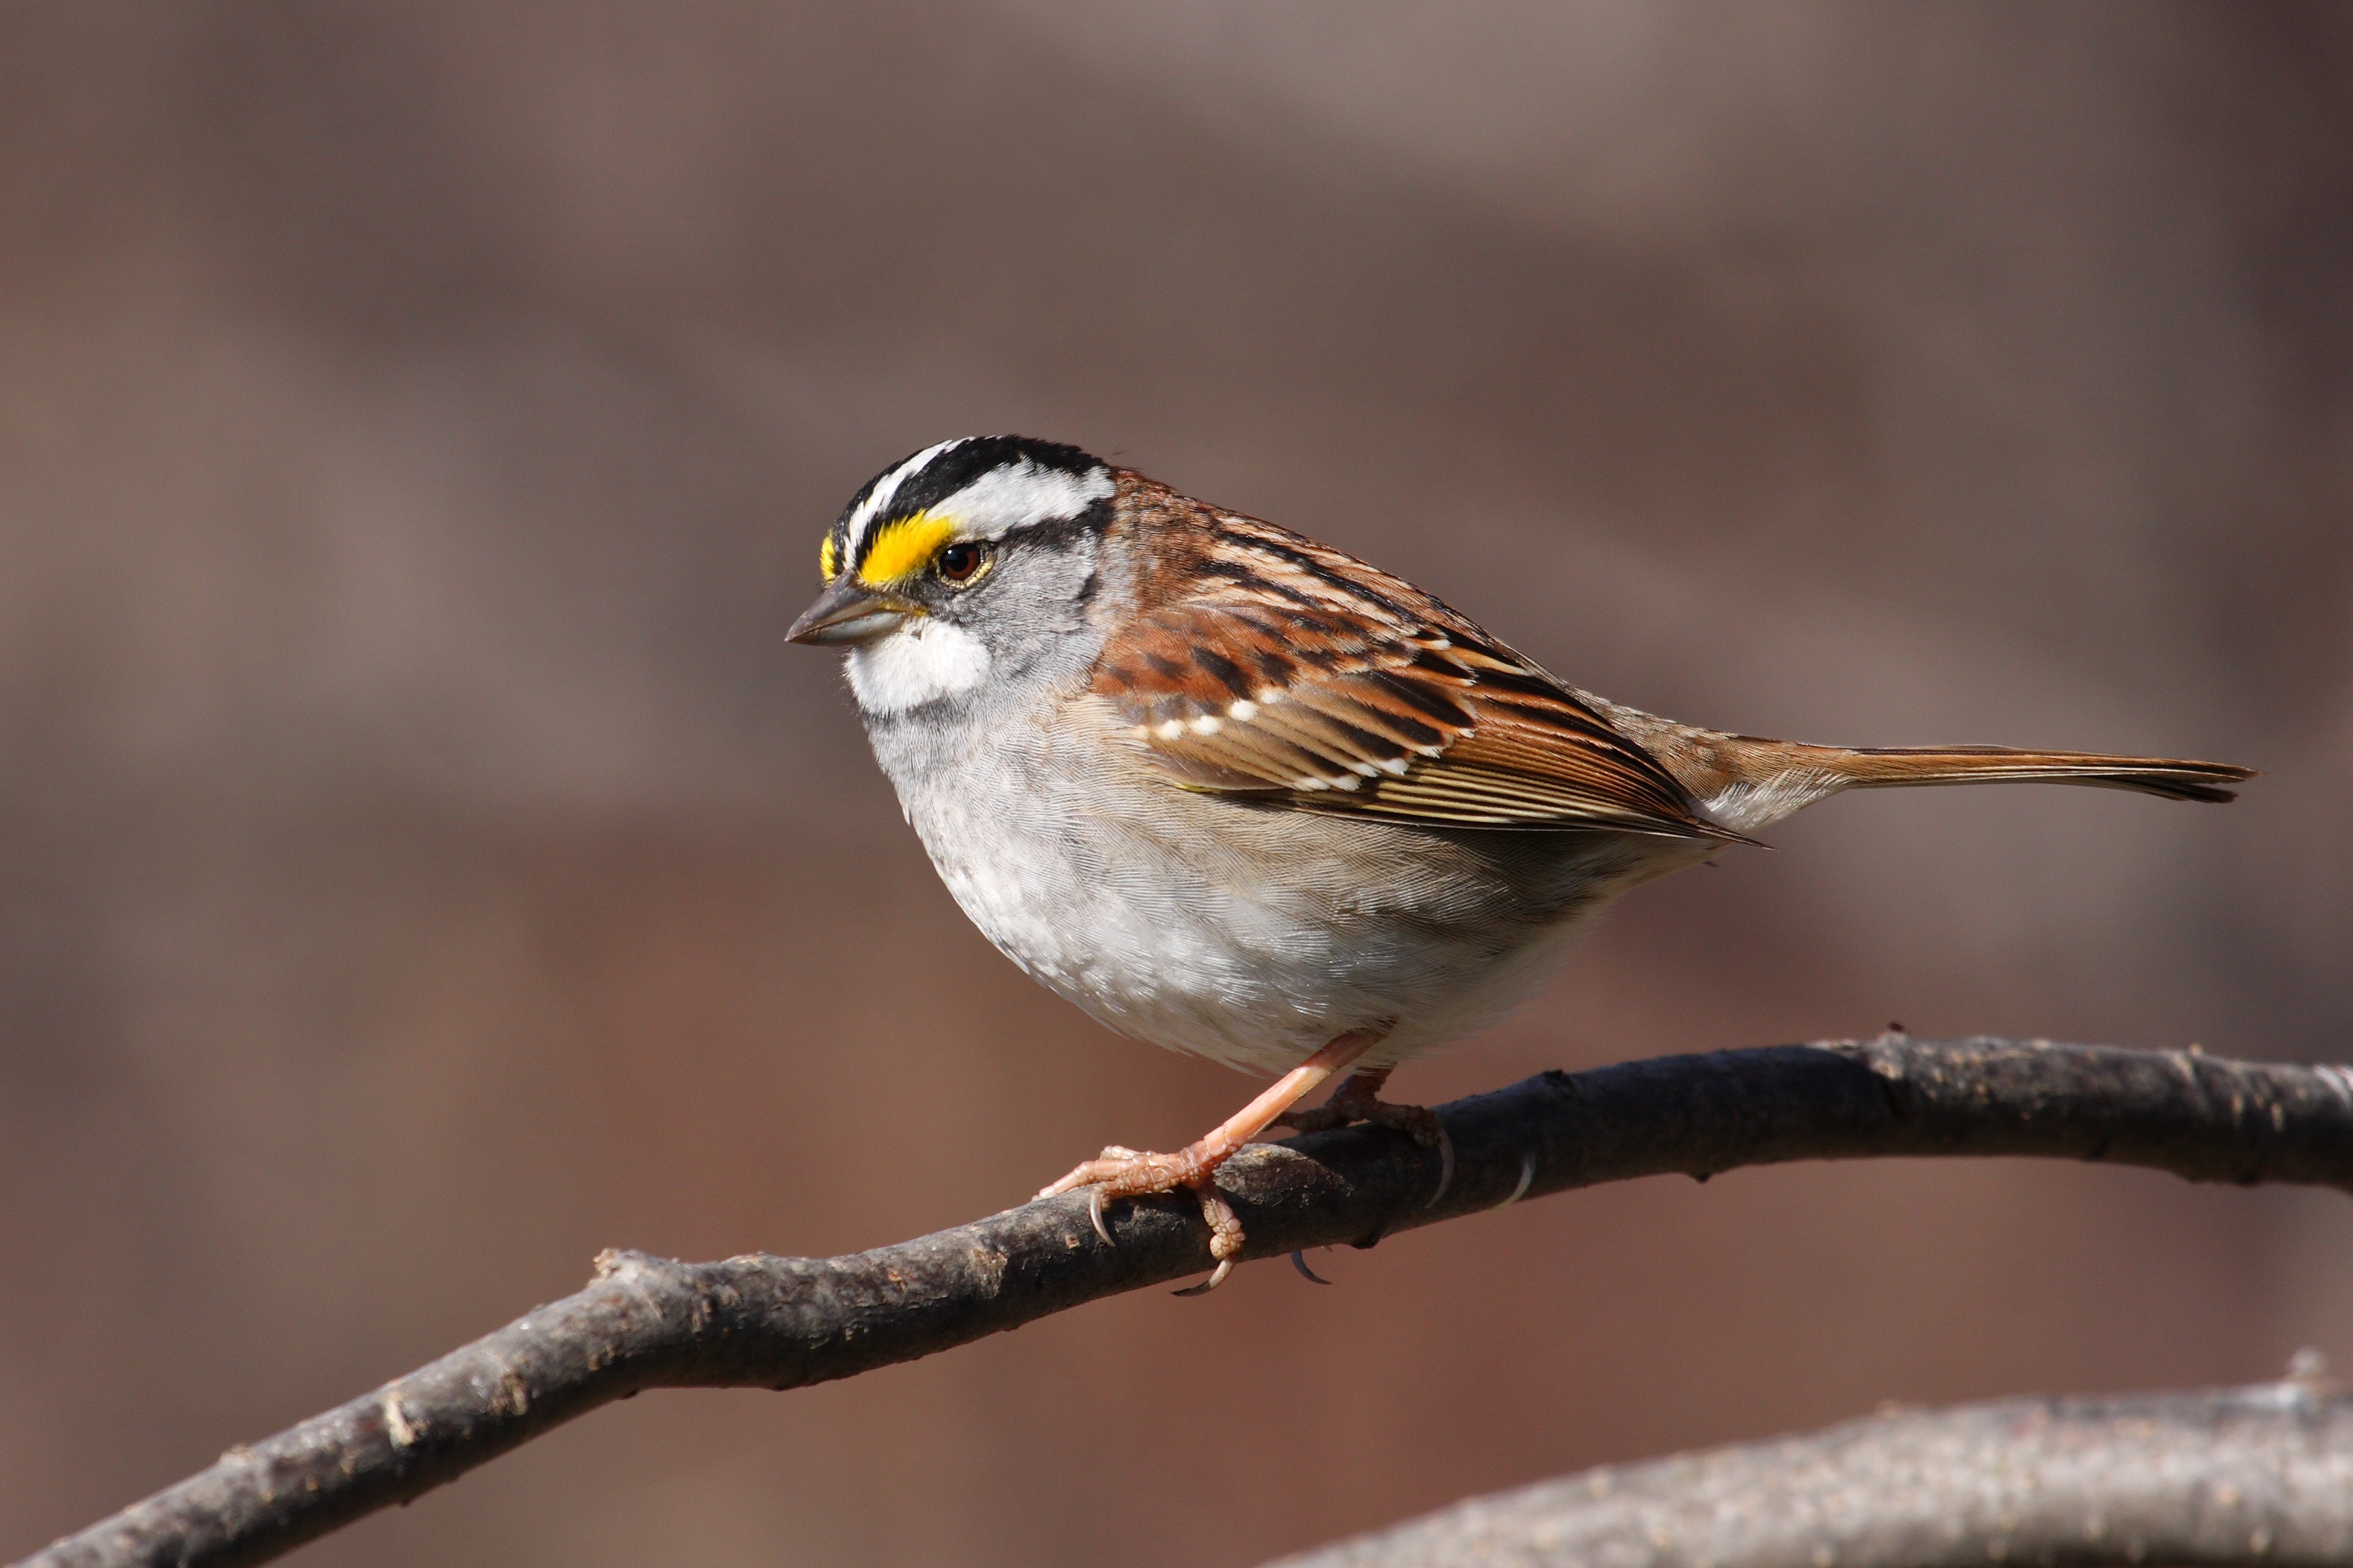 North Carolina Mountain Birds: White-throated Sparrow